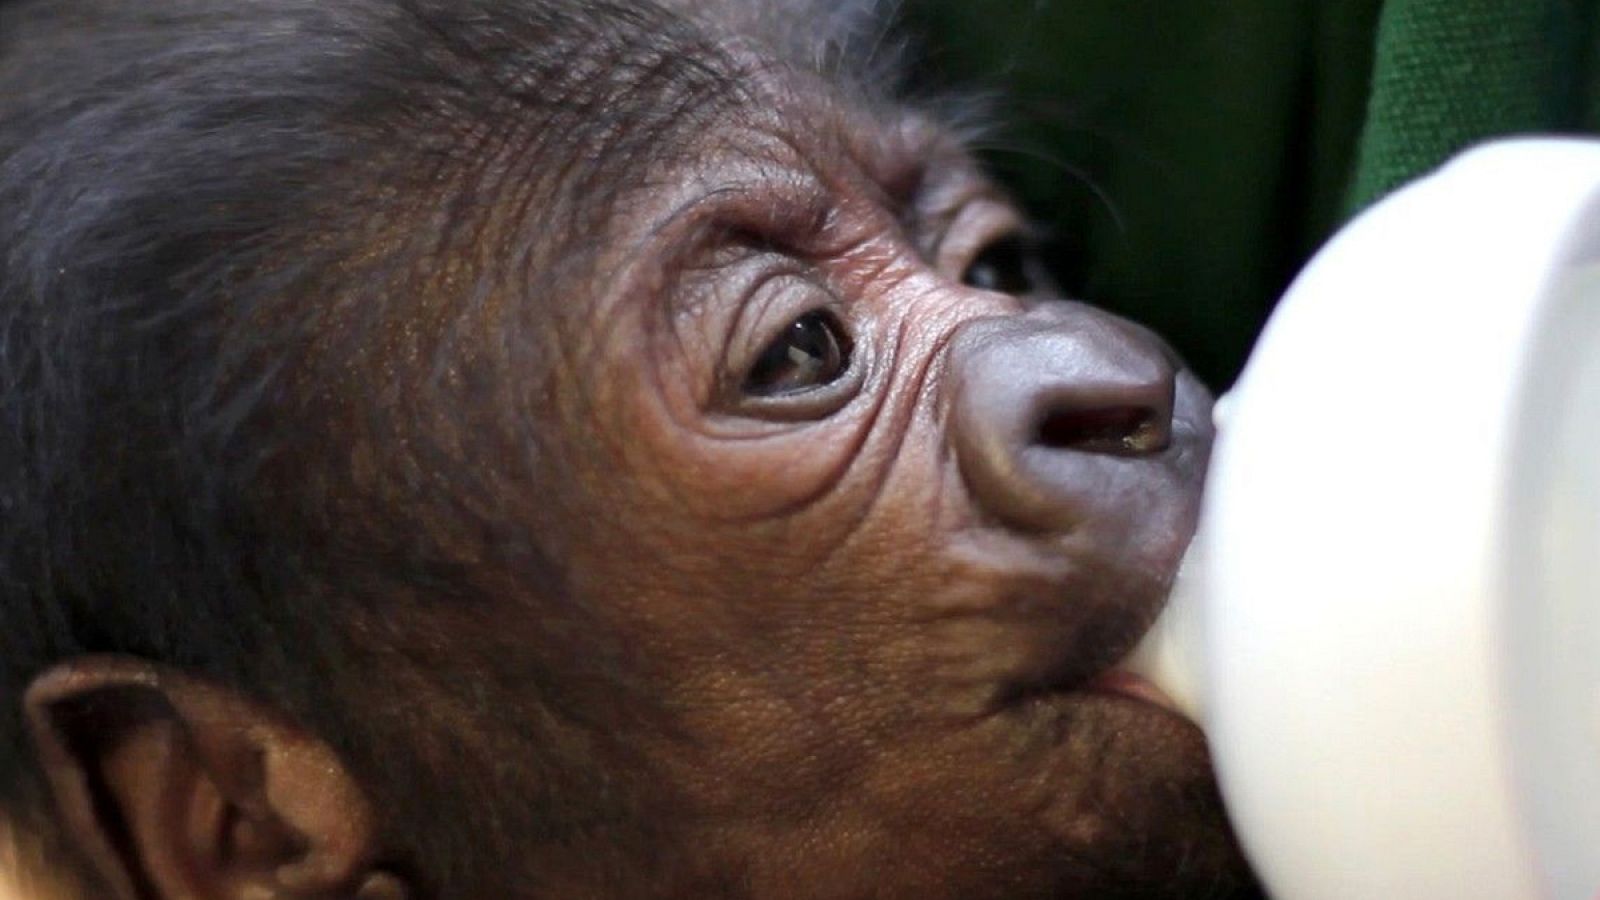 A la cría de gorila se le administró pequeñas cantidades de leche con biberón.